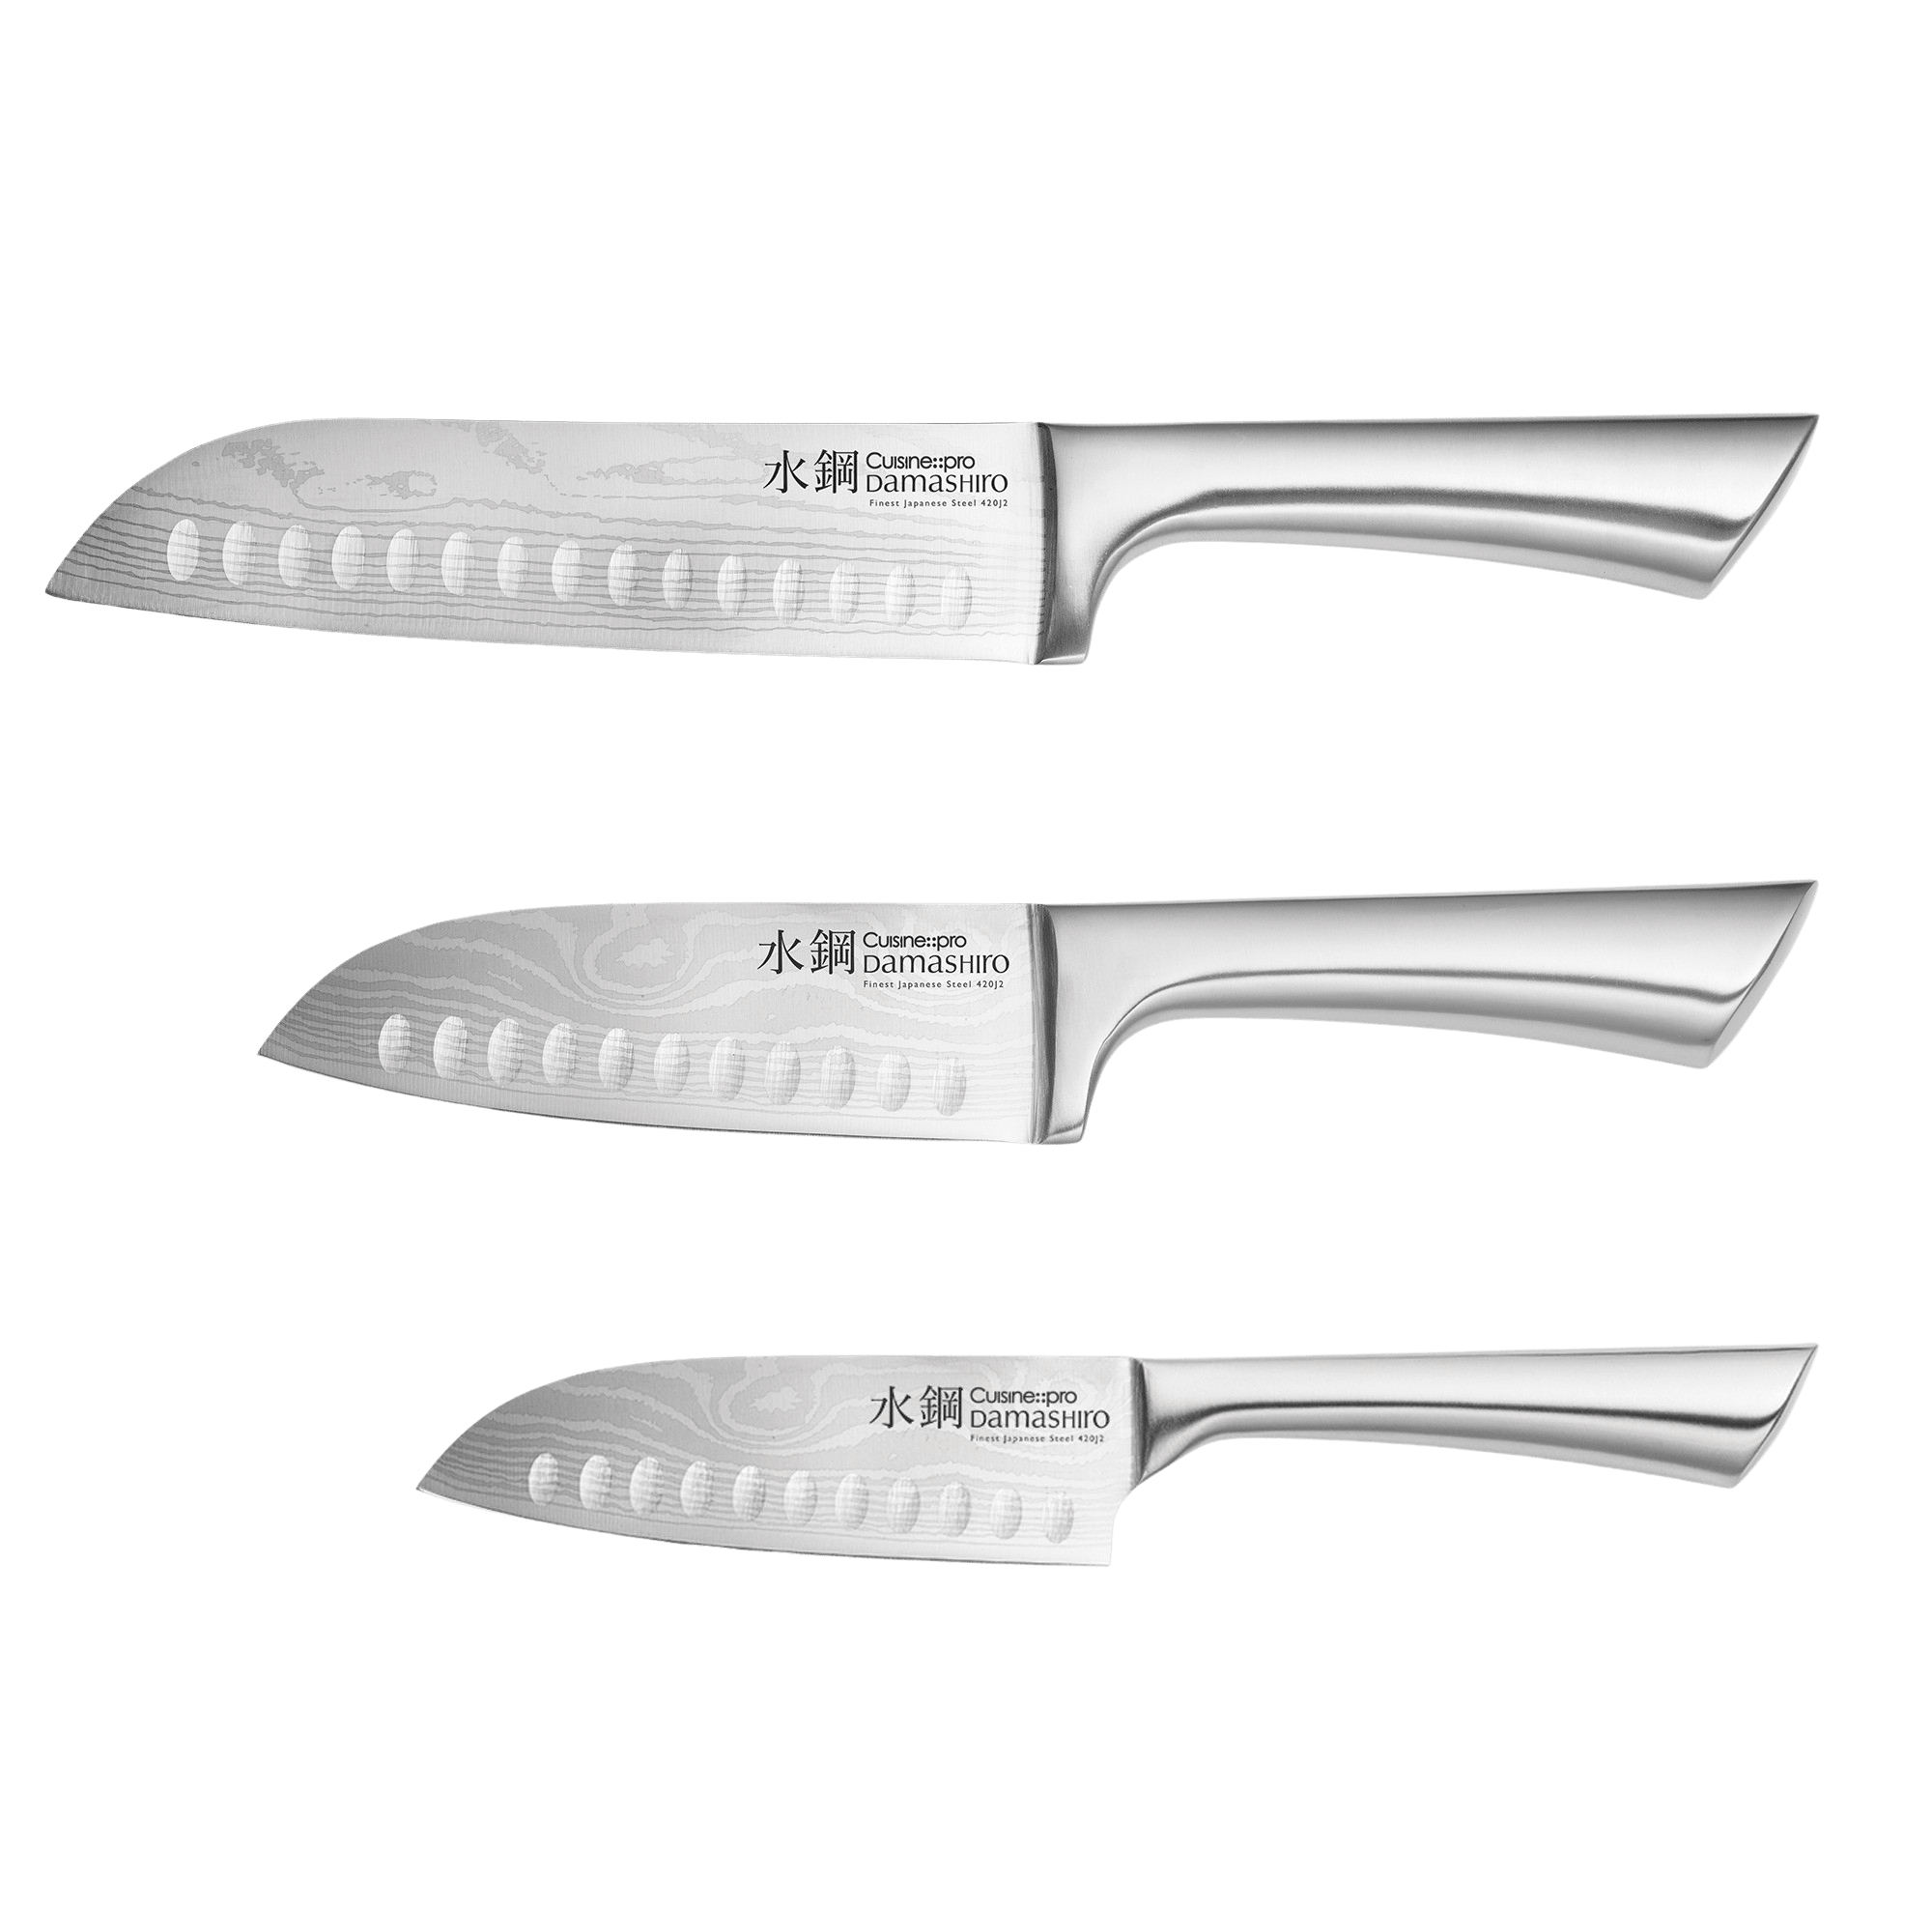 High Quality 3 Piece Professional Kitchen Knives Set - Cleaver Knife,  Santoku & Utility